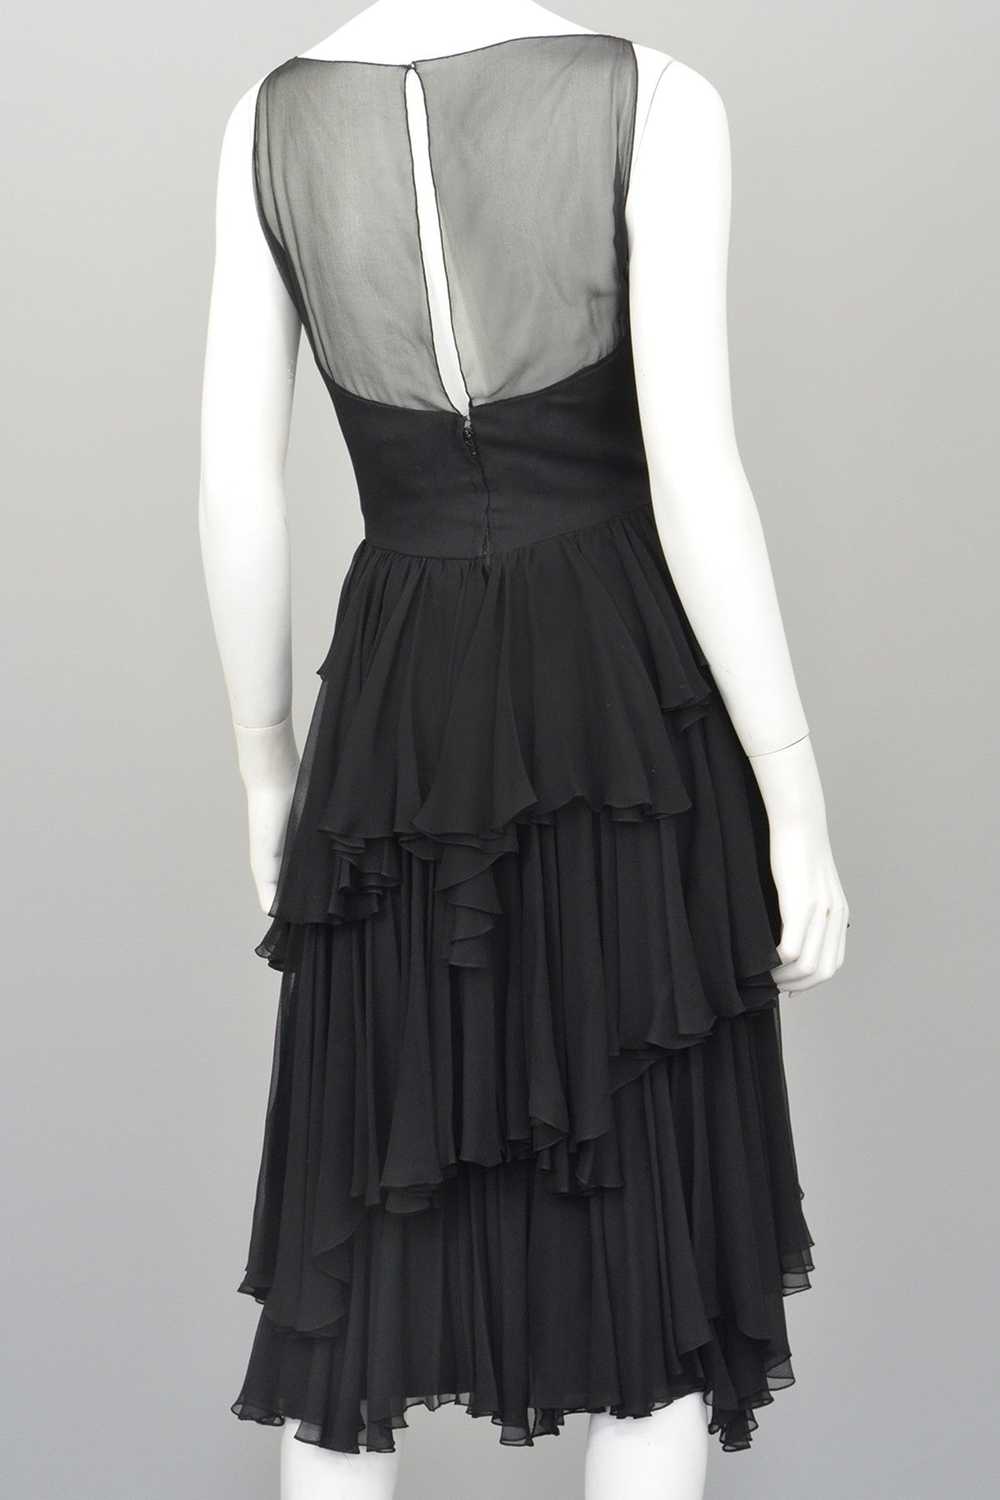 Vintage 1960s Black Chiffon Tiered Skirt Cocktail… - image 2